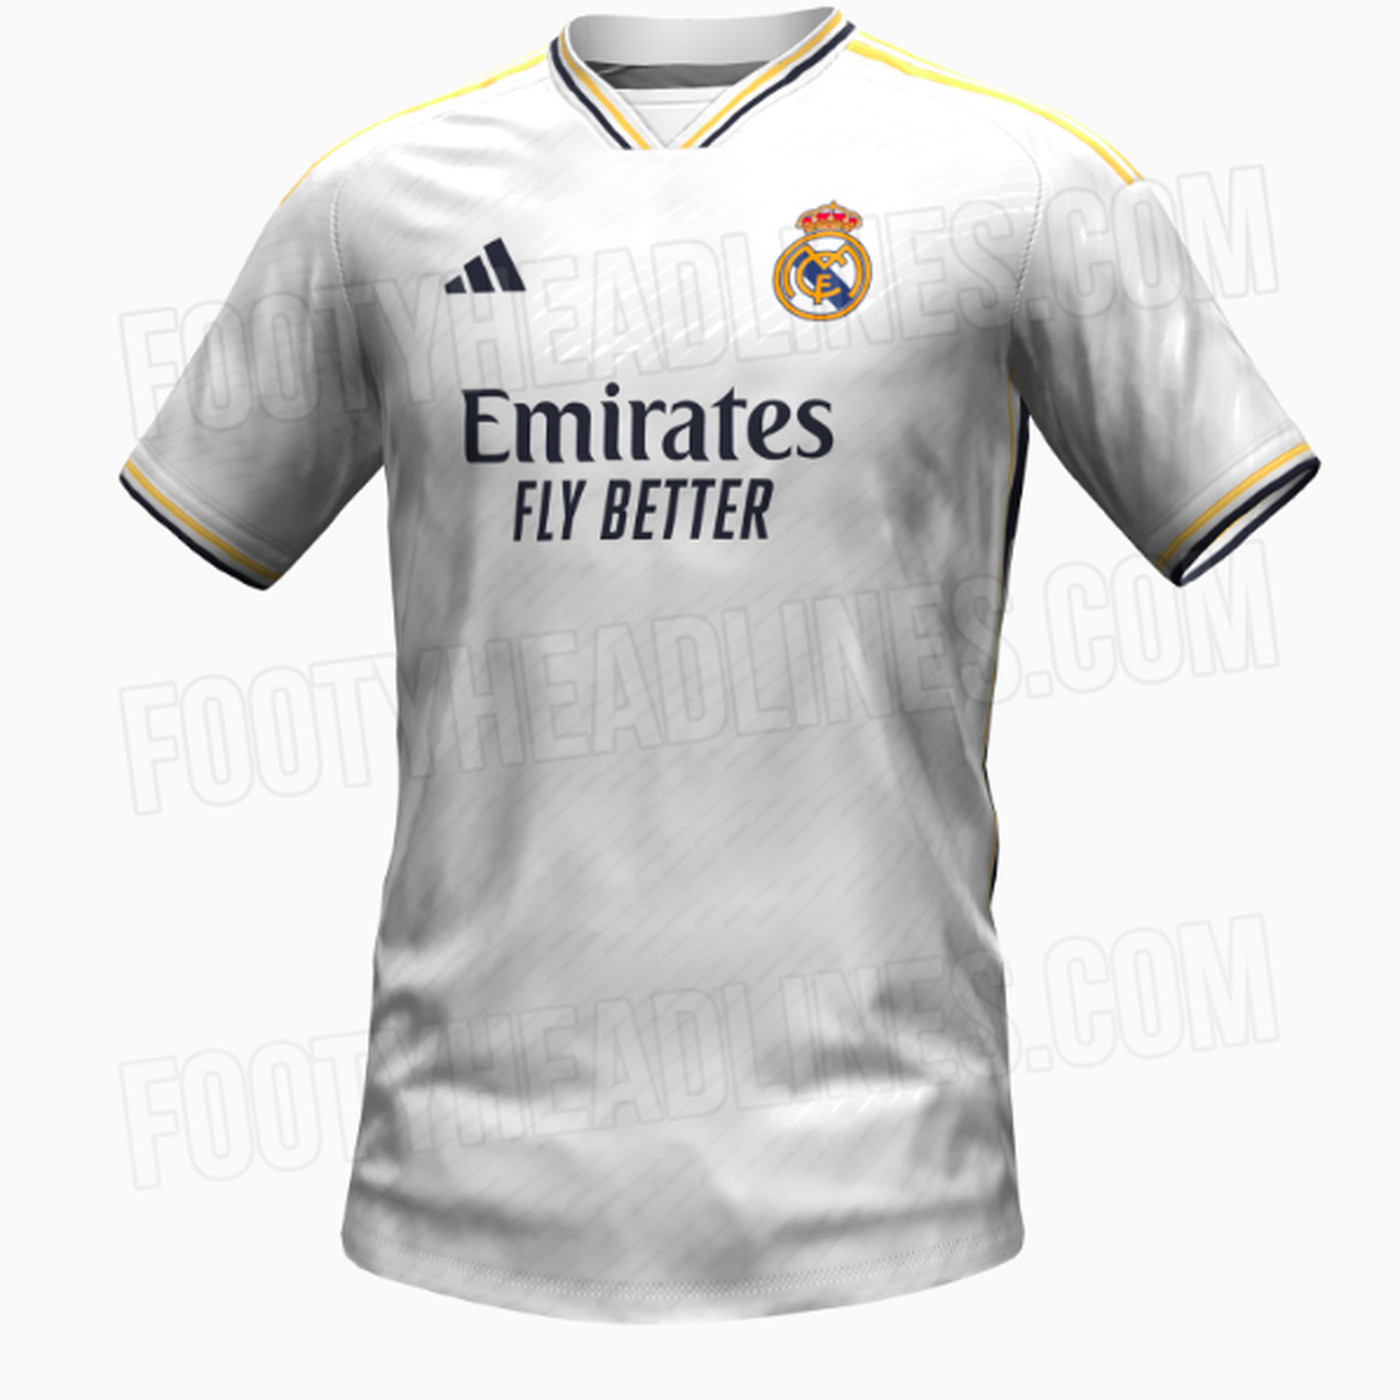 Real Madrid kit for the 2023 - 2024 season leaked - Managing Madrid